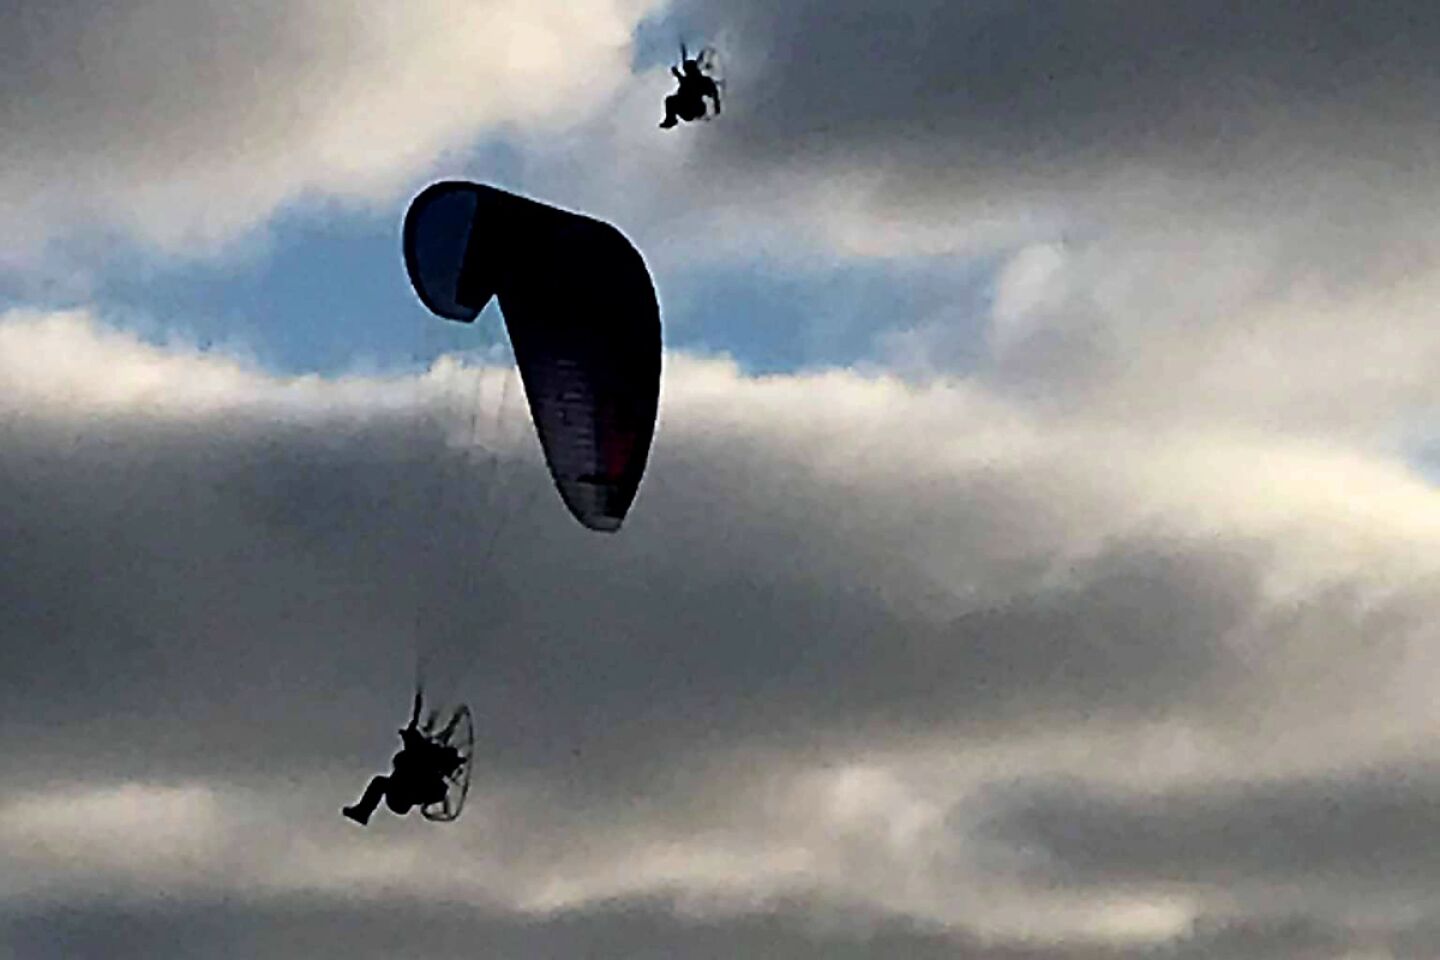 Ashley Bush Hang gliders at Westbourne.jpg